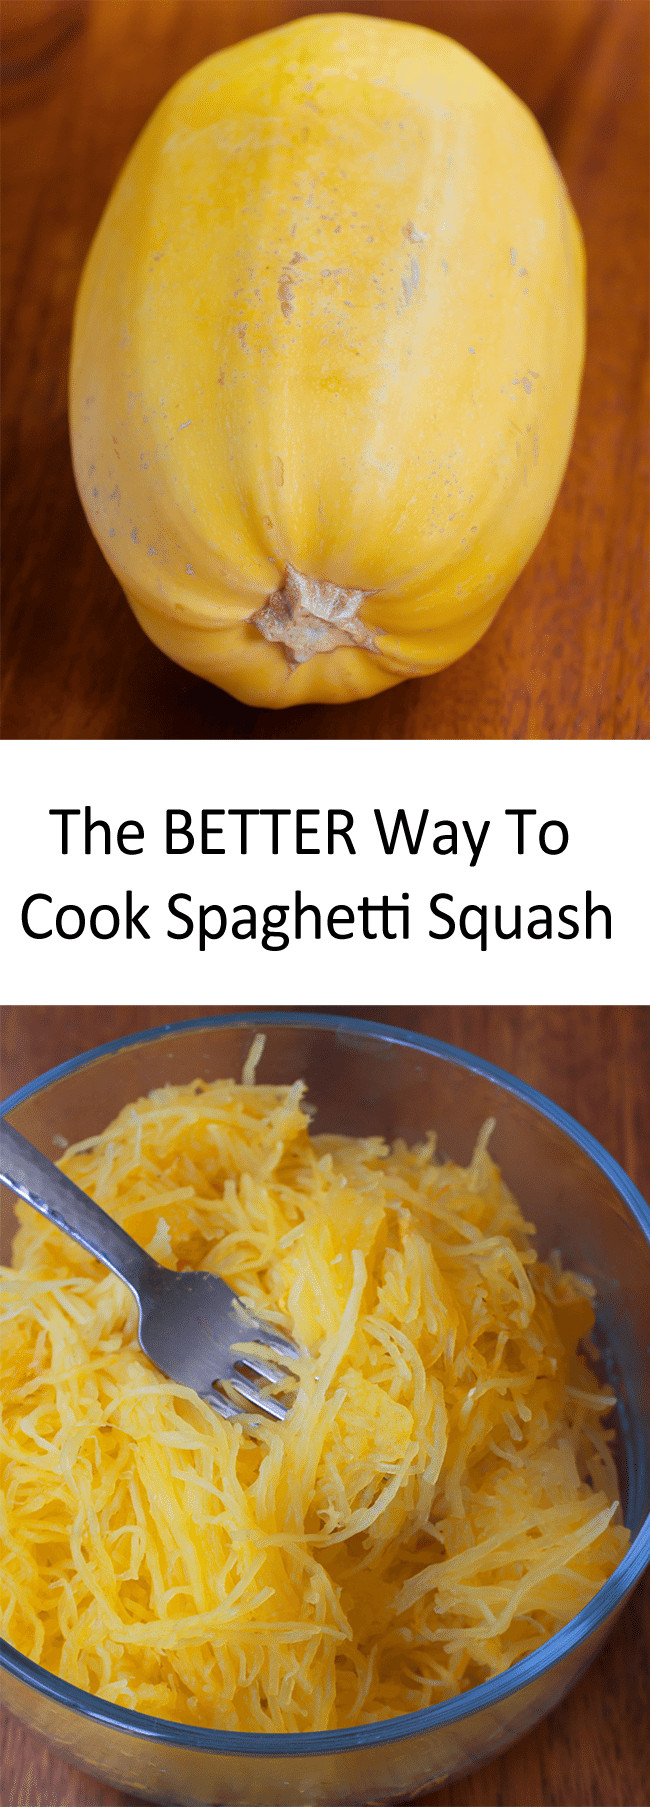 Spaghetti Squash Microwave
 How To Cook Spaghetti Squash